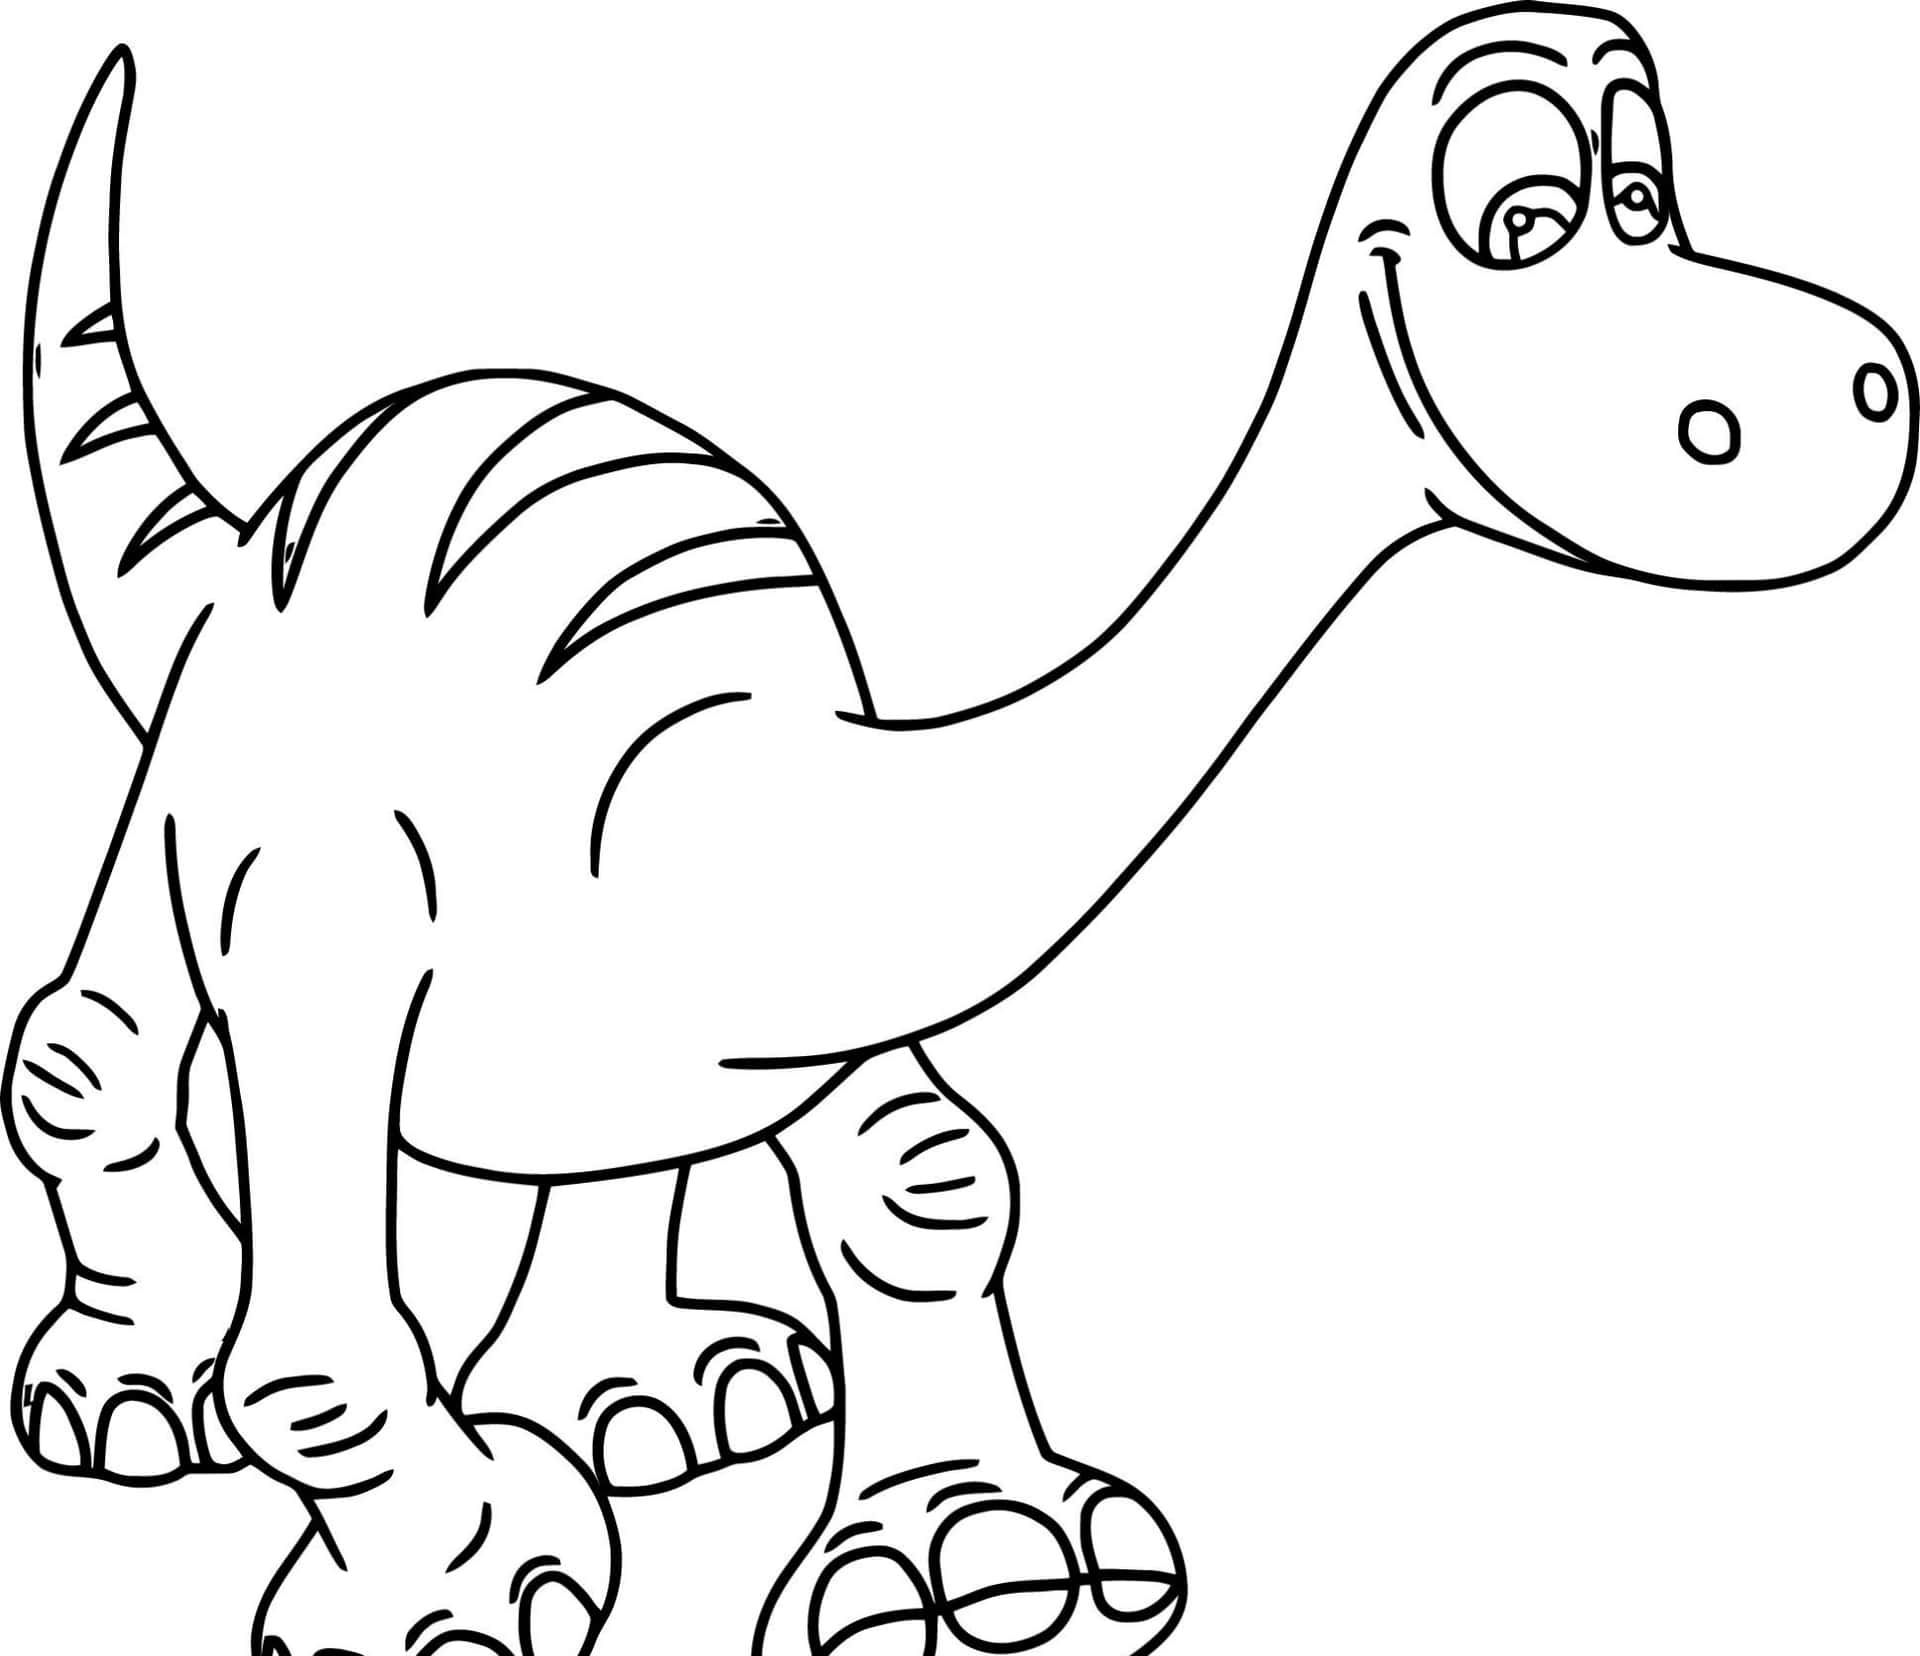 A Cartoon Dinosaur Coloring Page